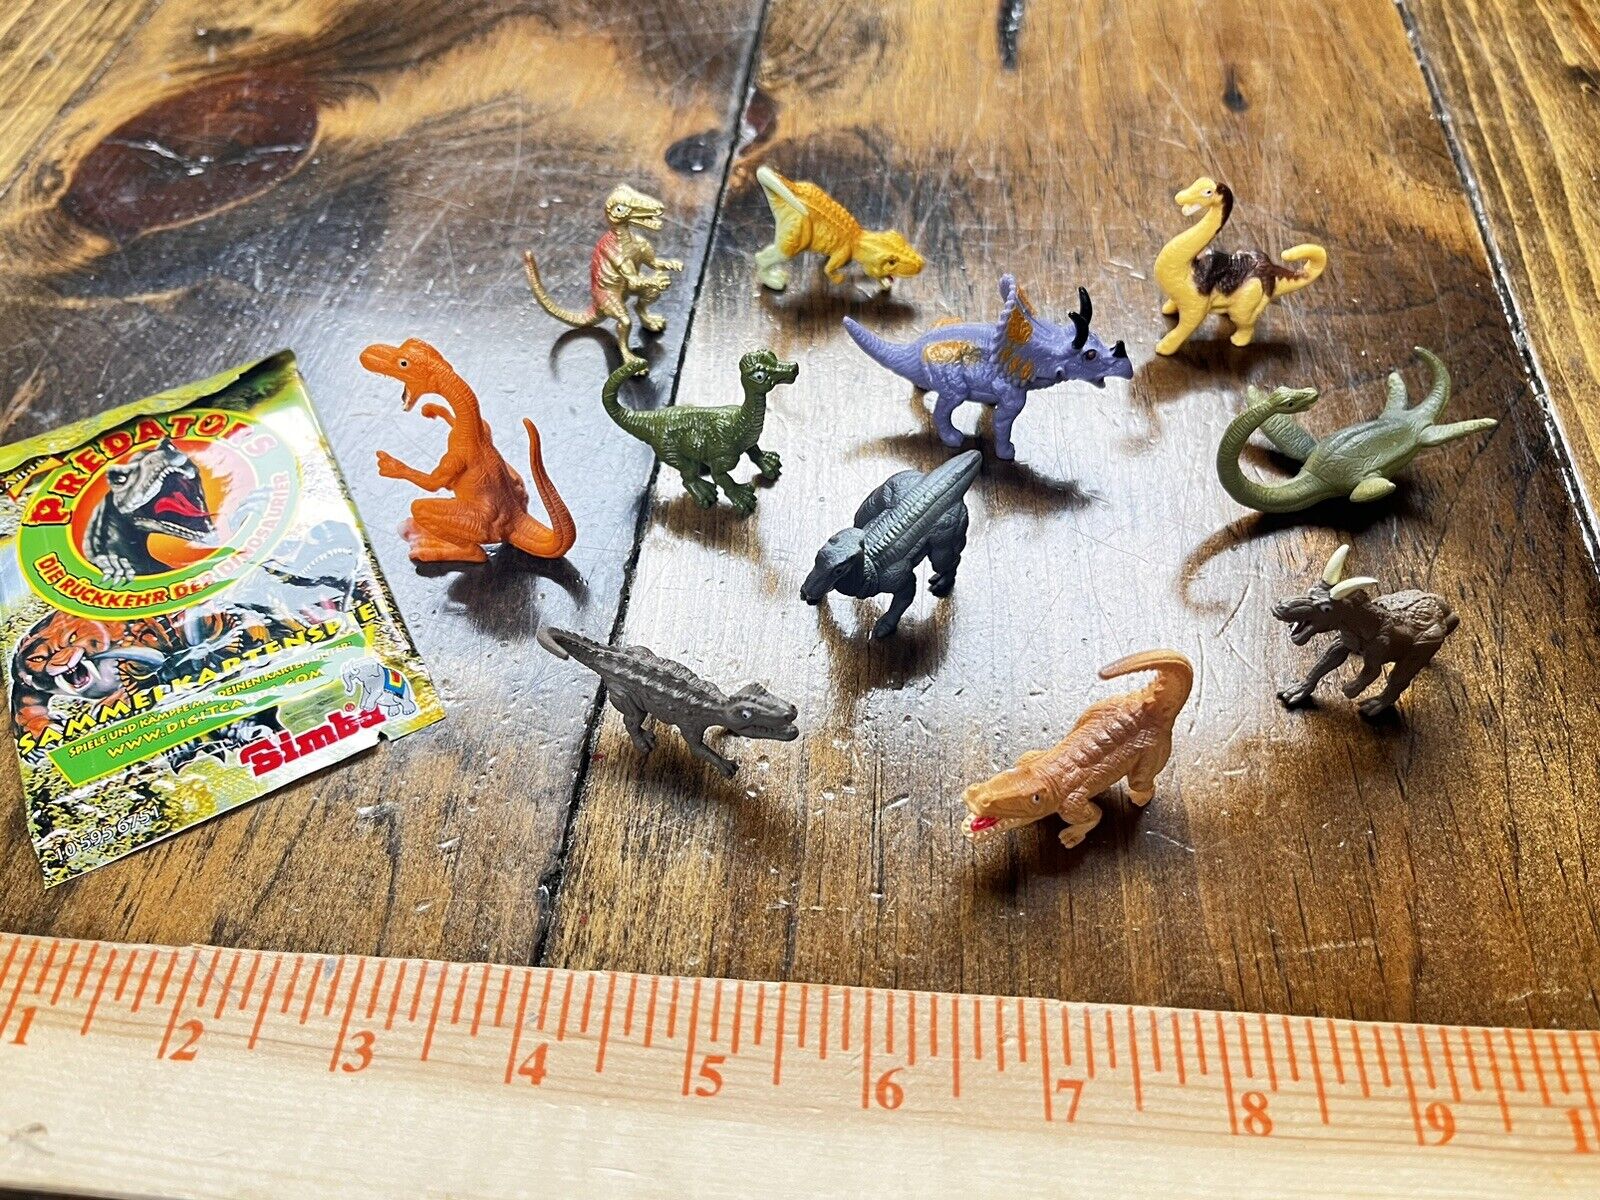 Dinosaur--11 Prehistoric Dinosaurs from the rare PREDATORS series with card pack